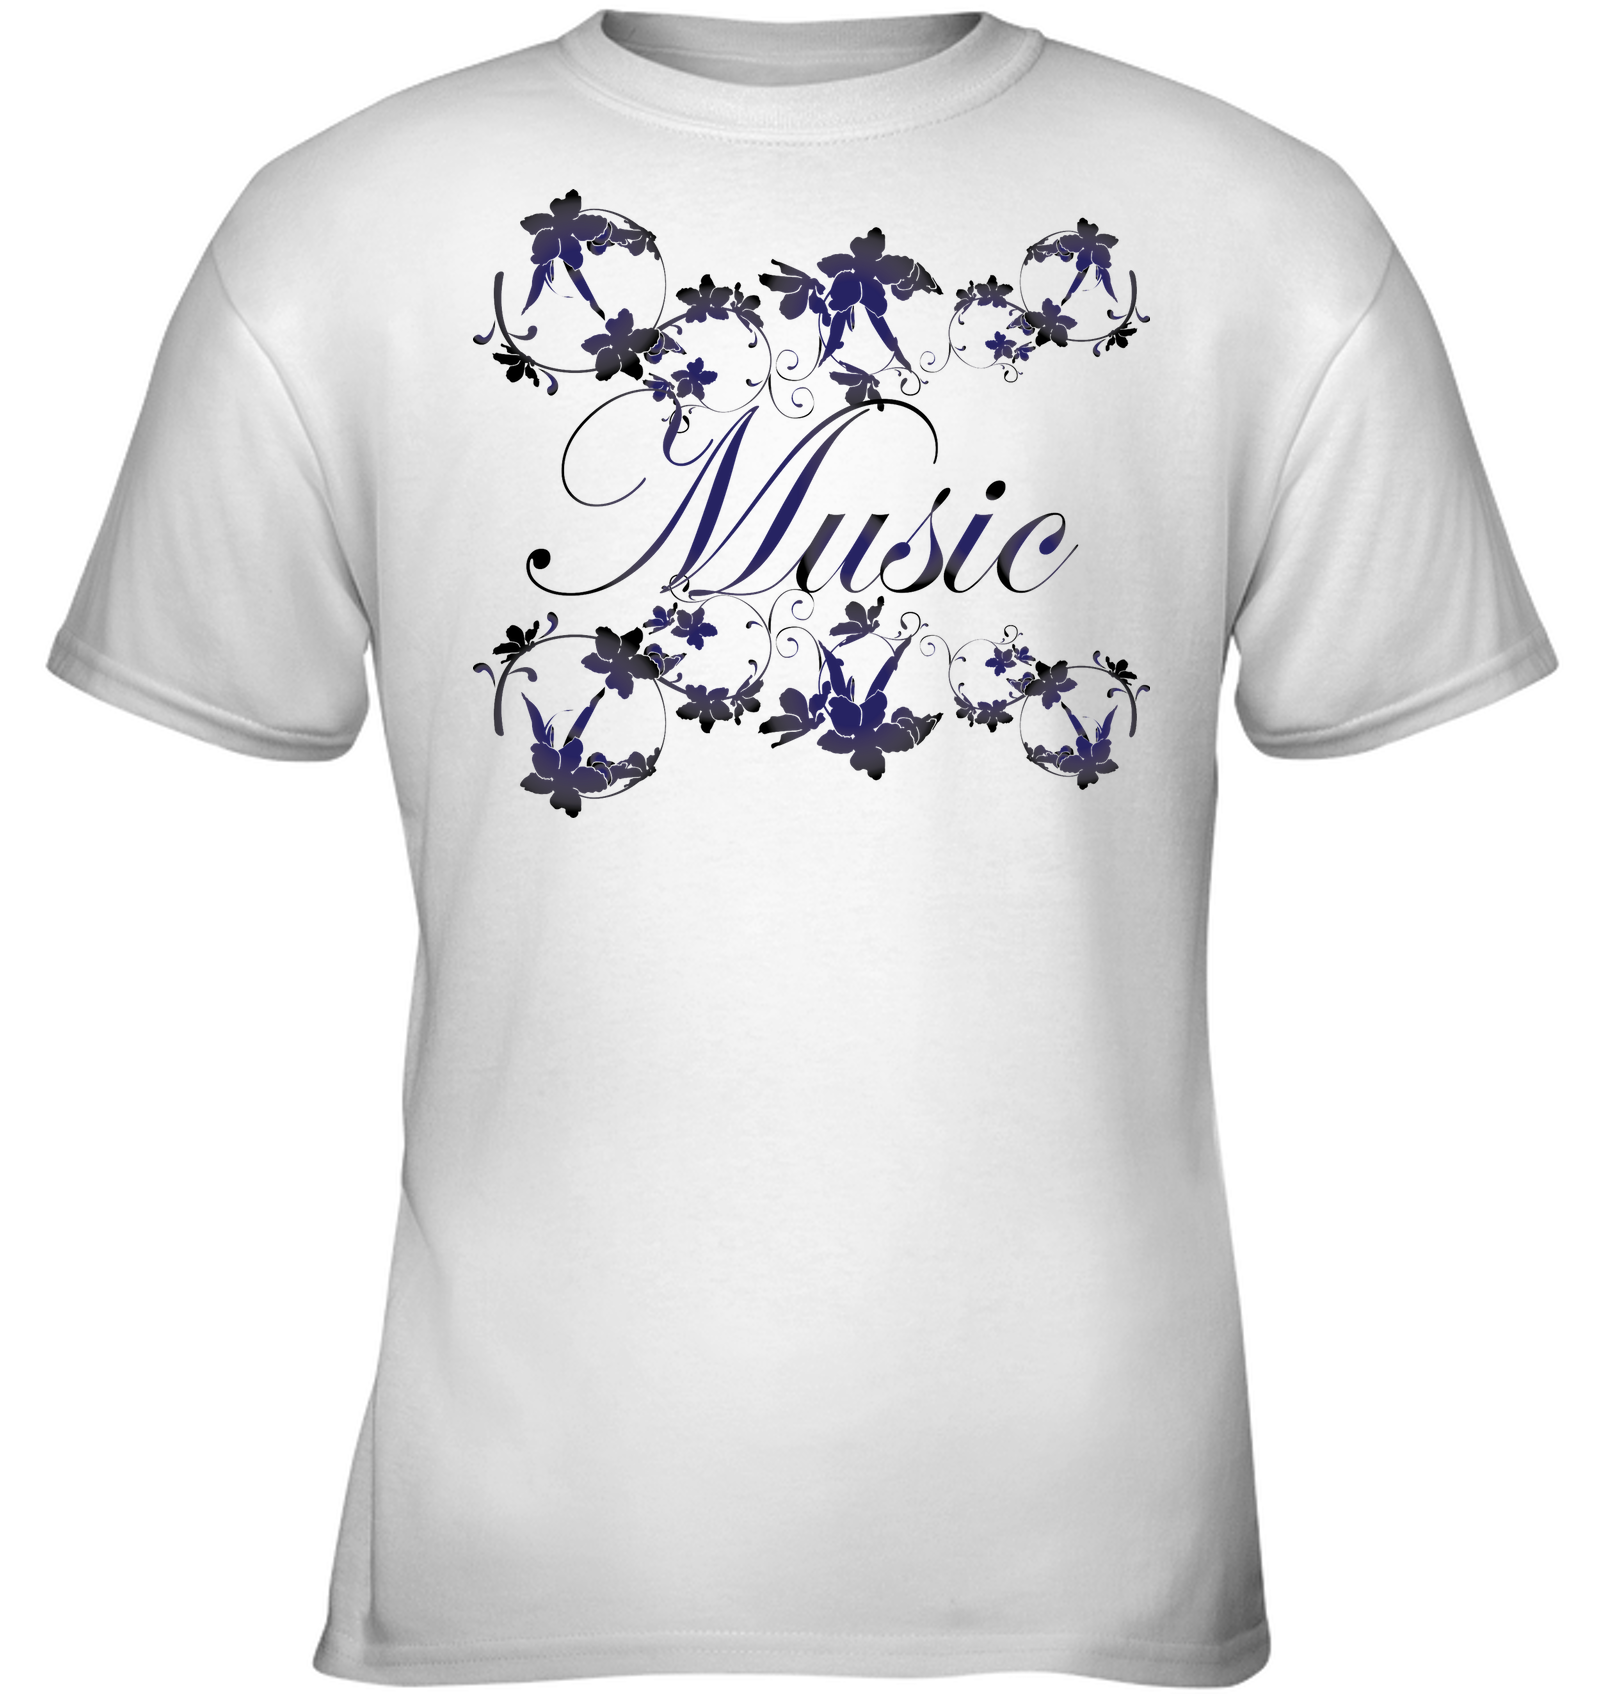 Music with Flowers - Gildan Youth Short Sleeve T-Shirt